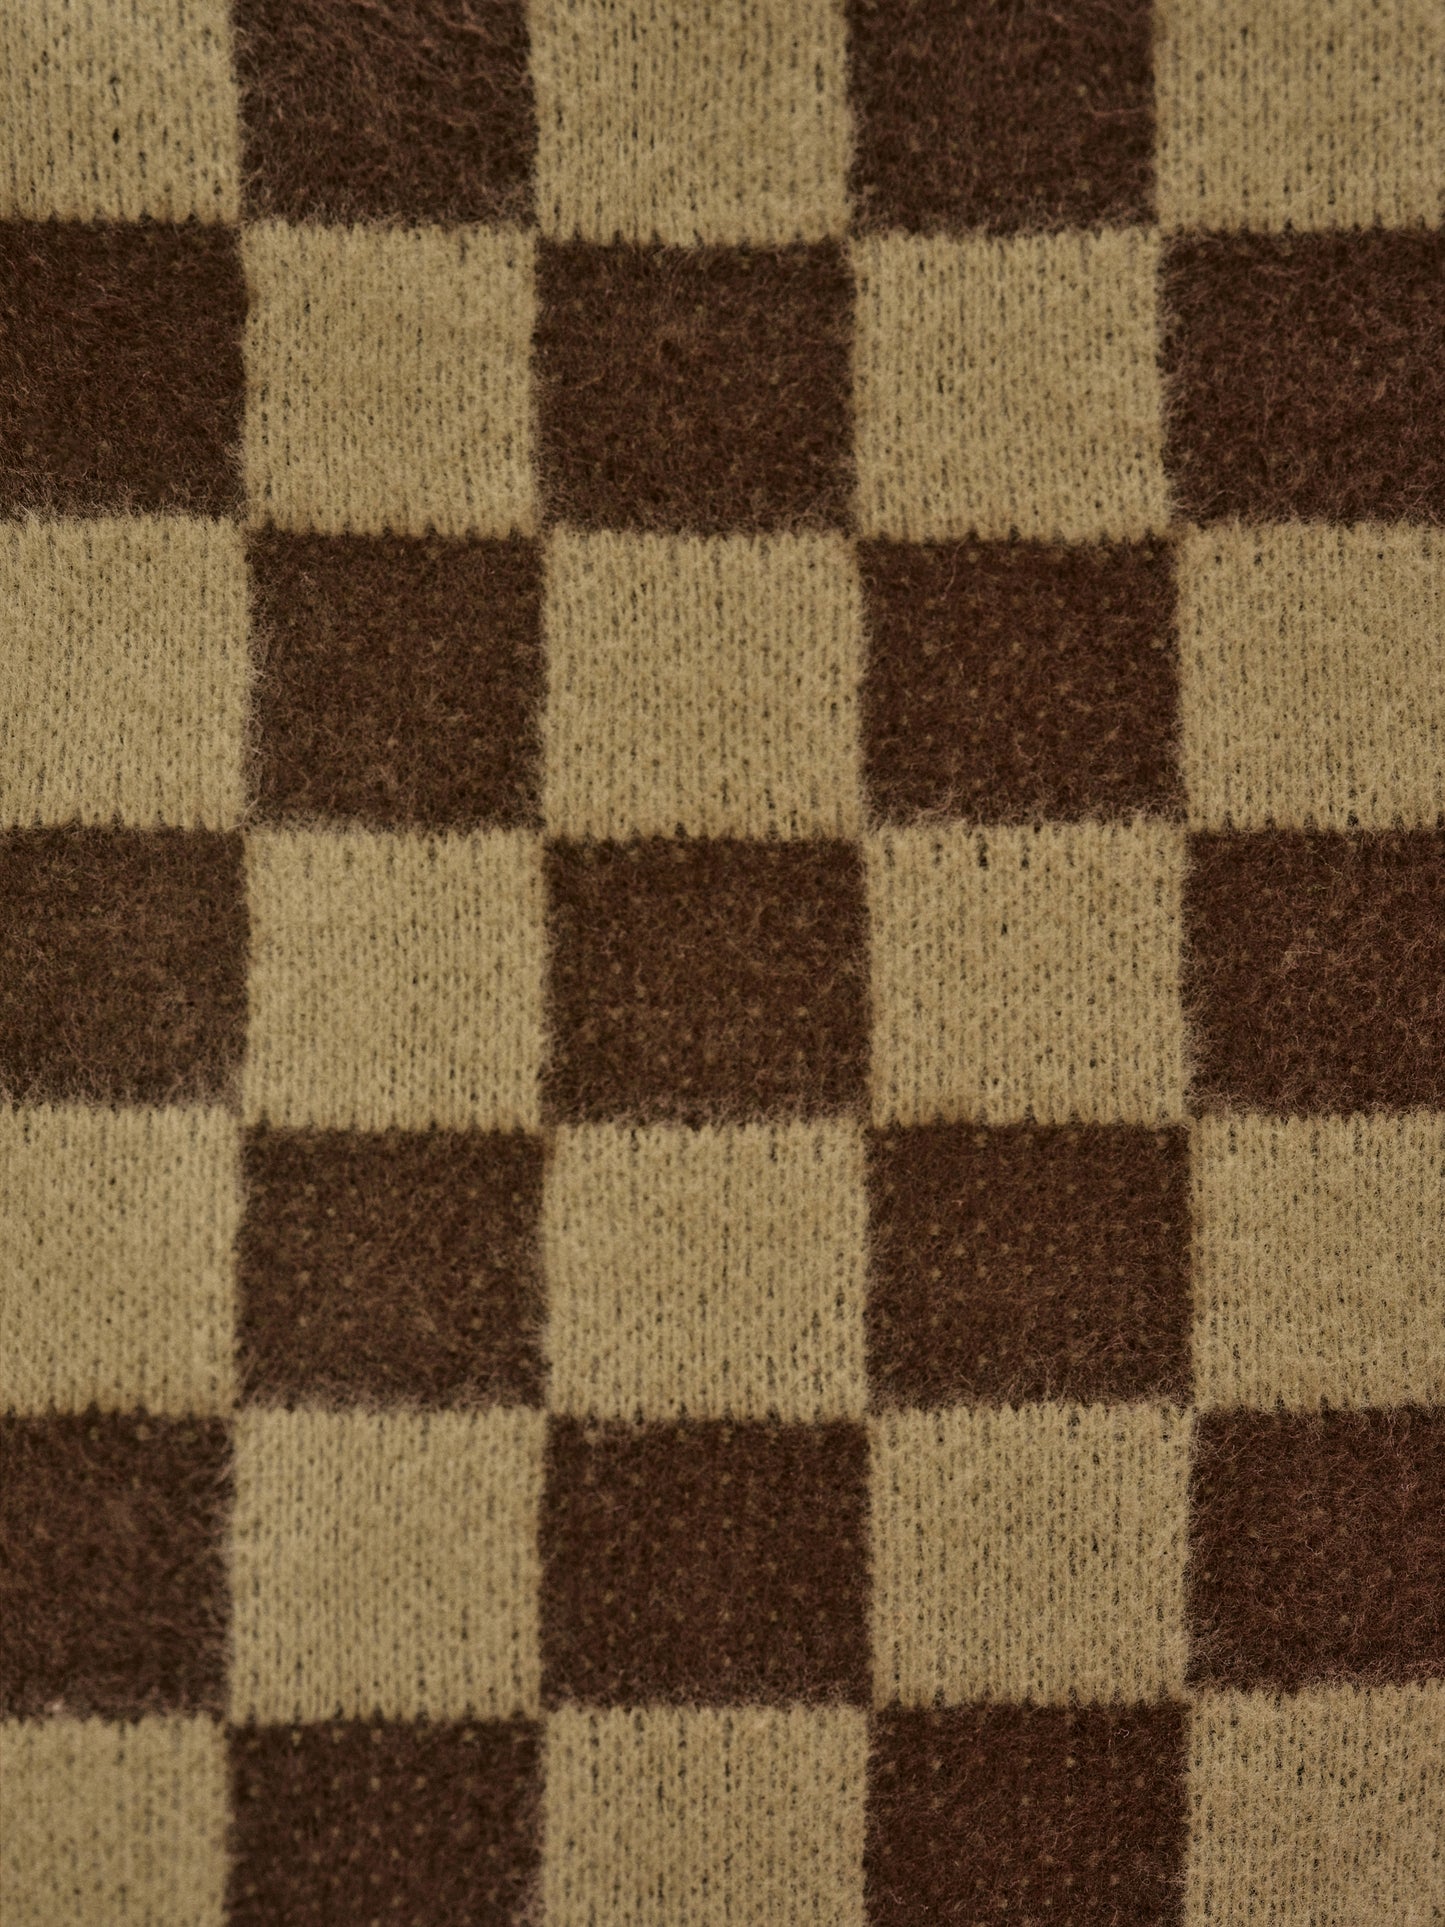 Checker Knit Skirt, Toffee